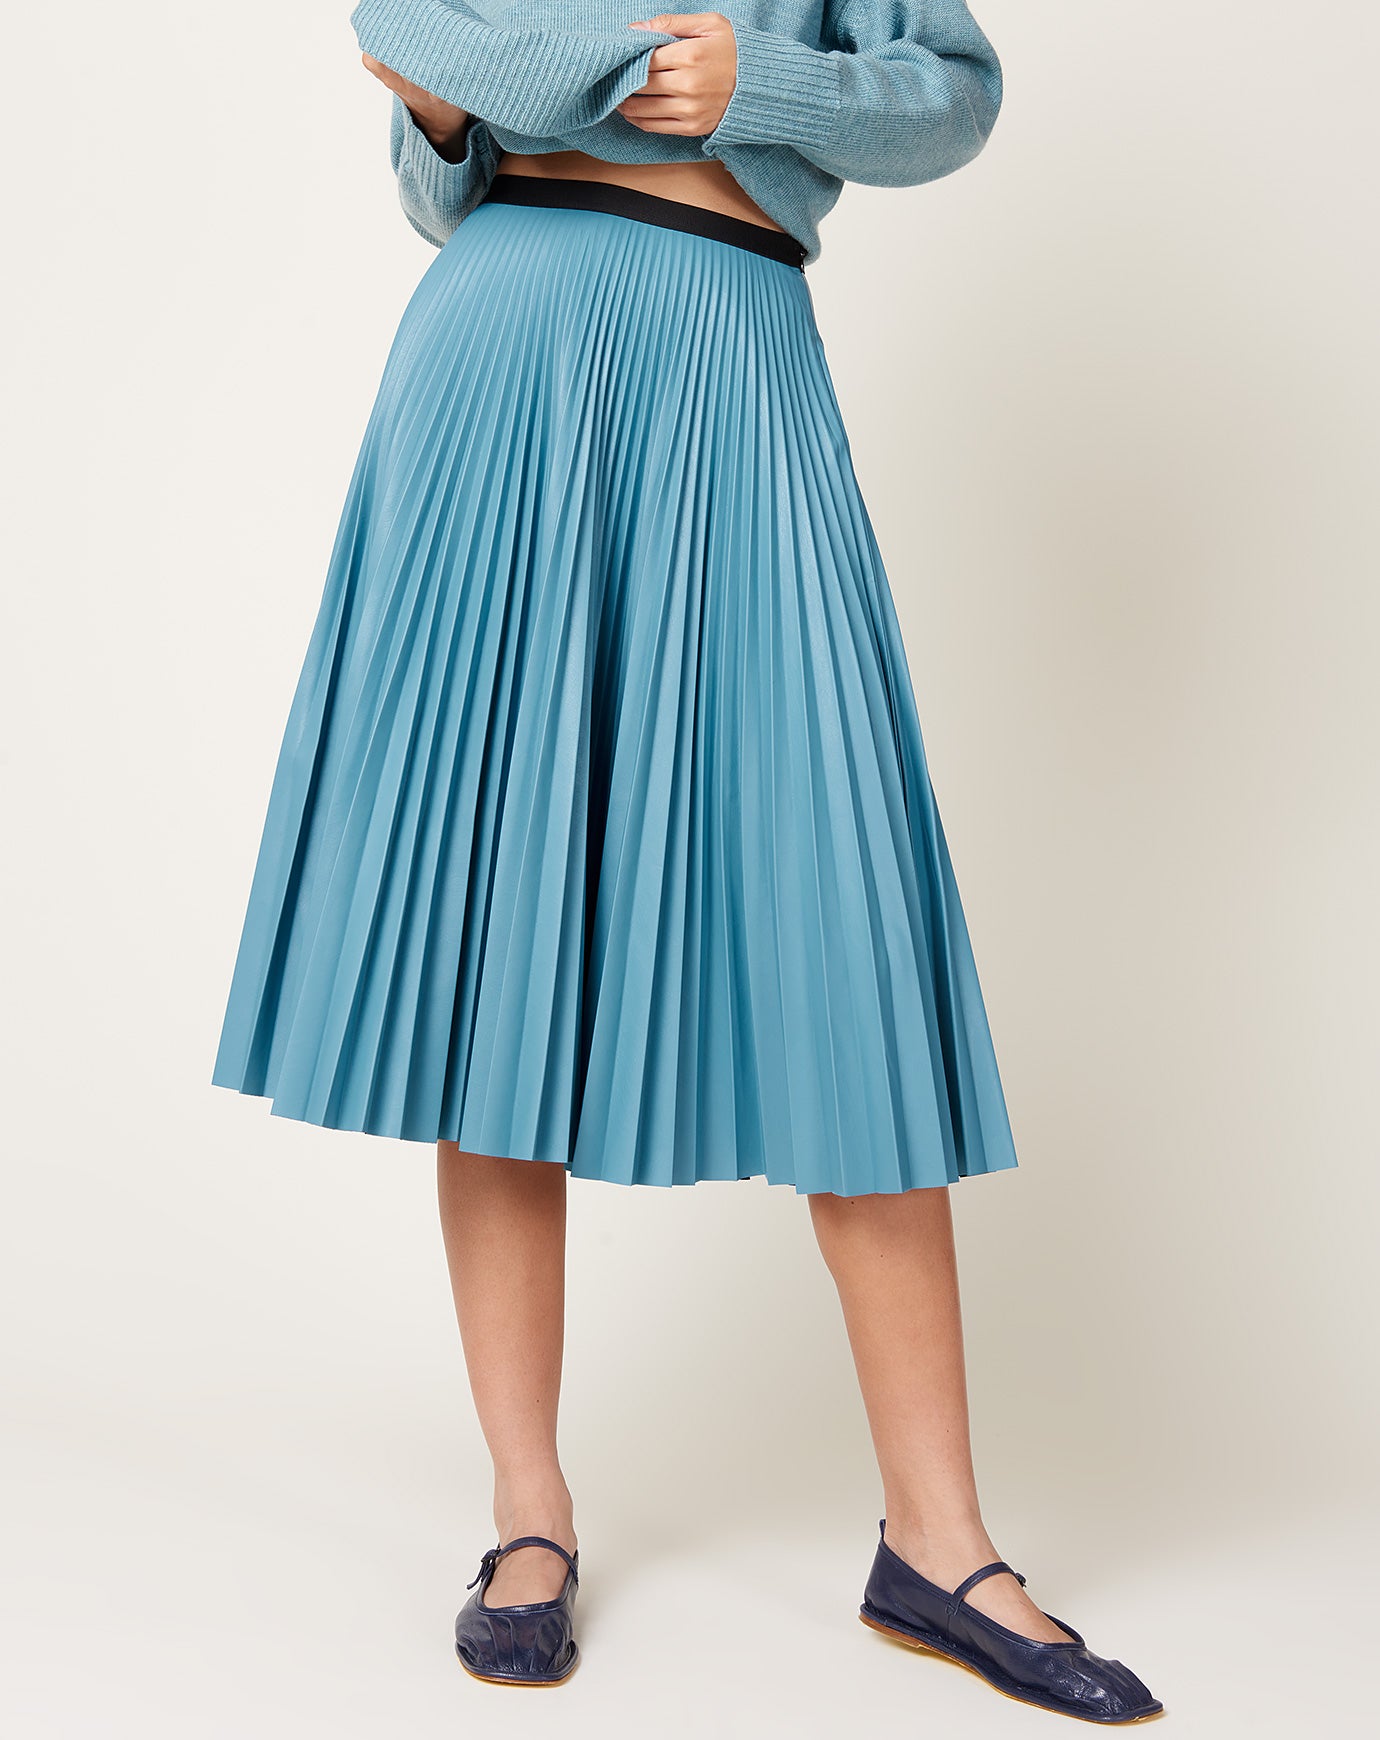 Rachel Comey Larni Skirt in Blue Leatherette